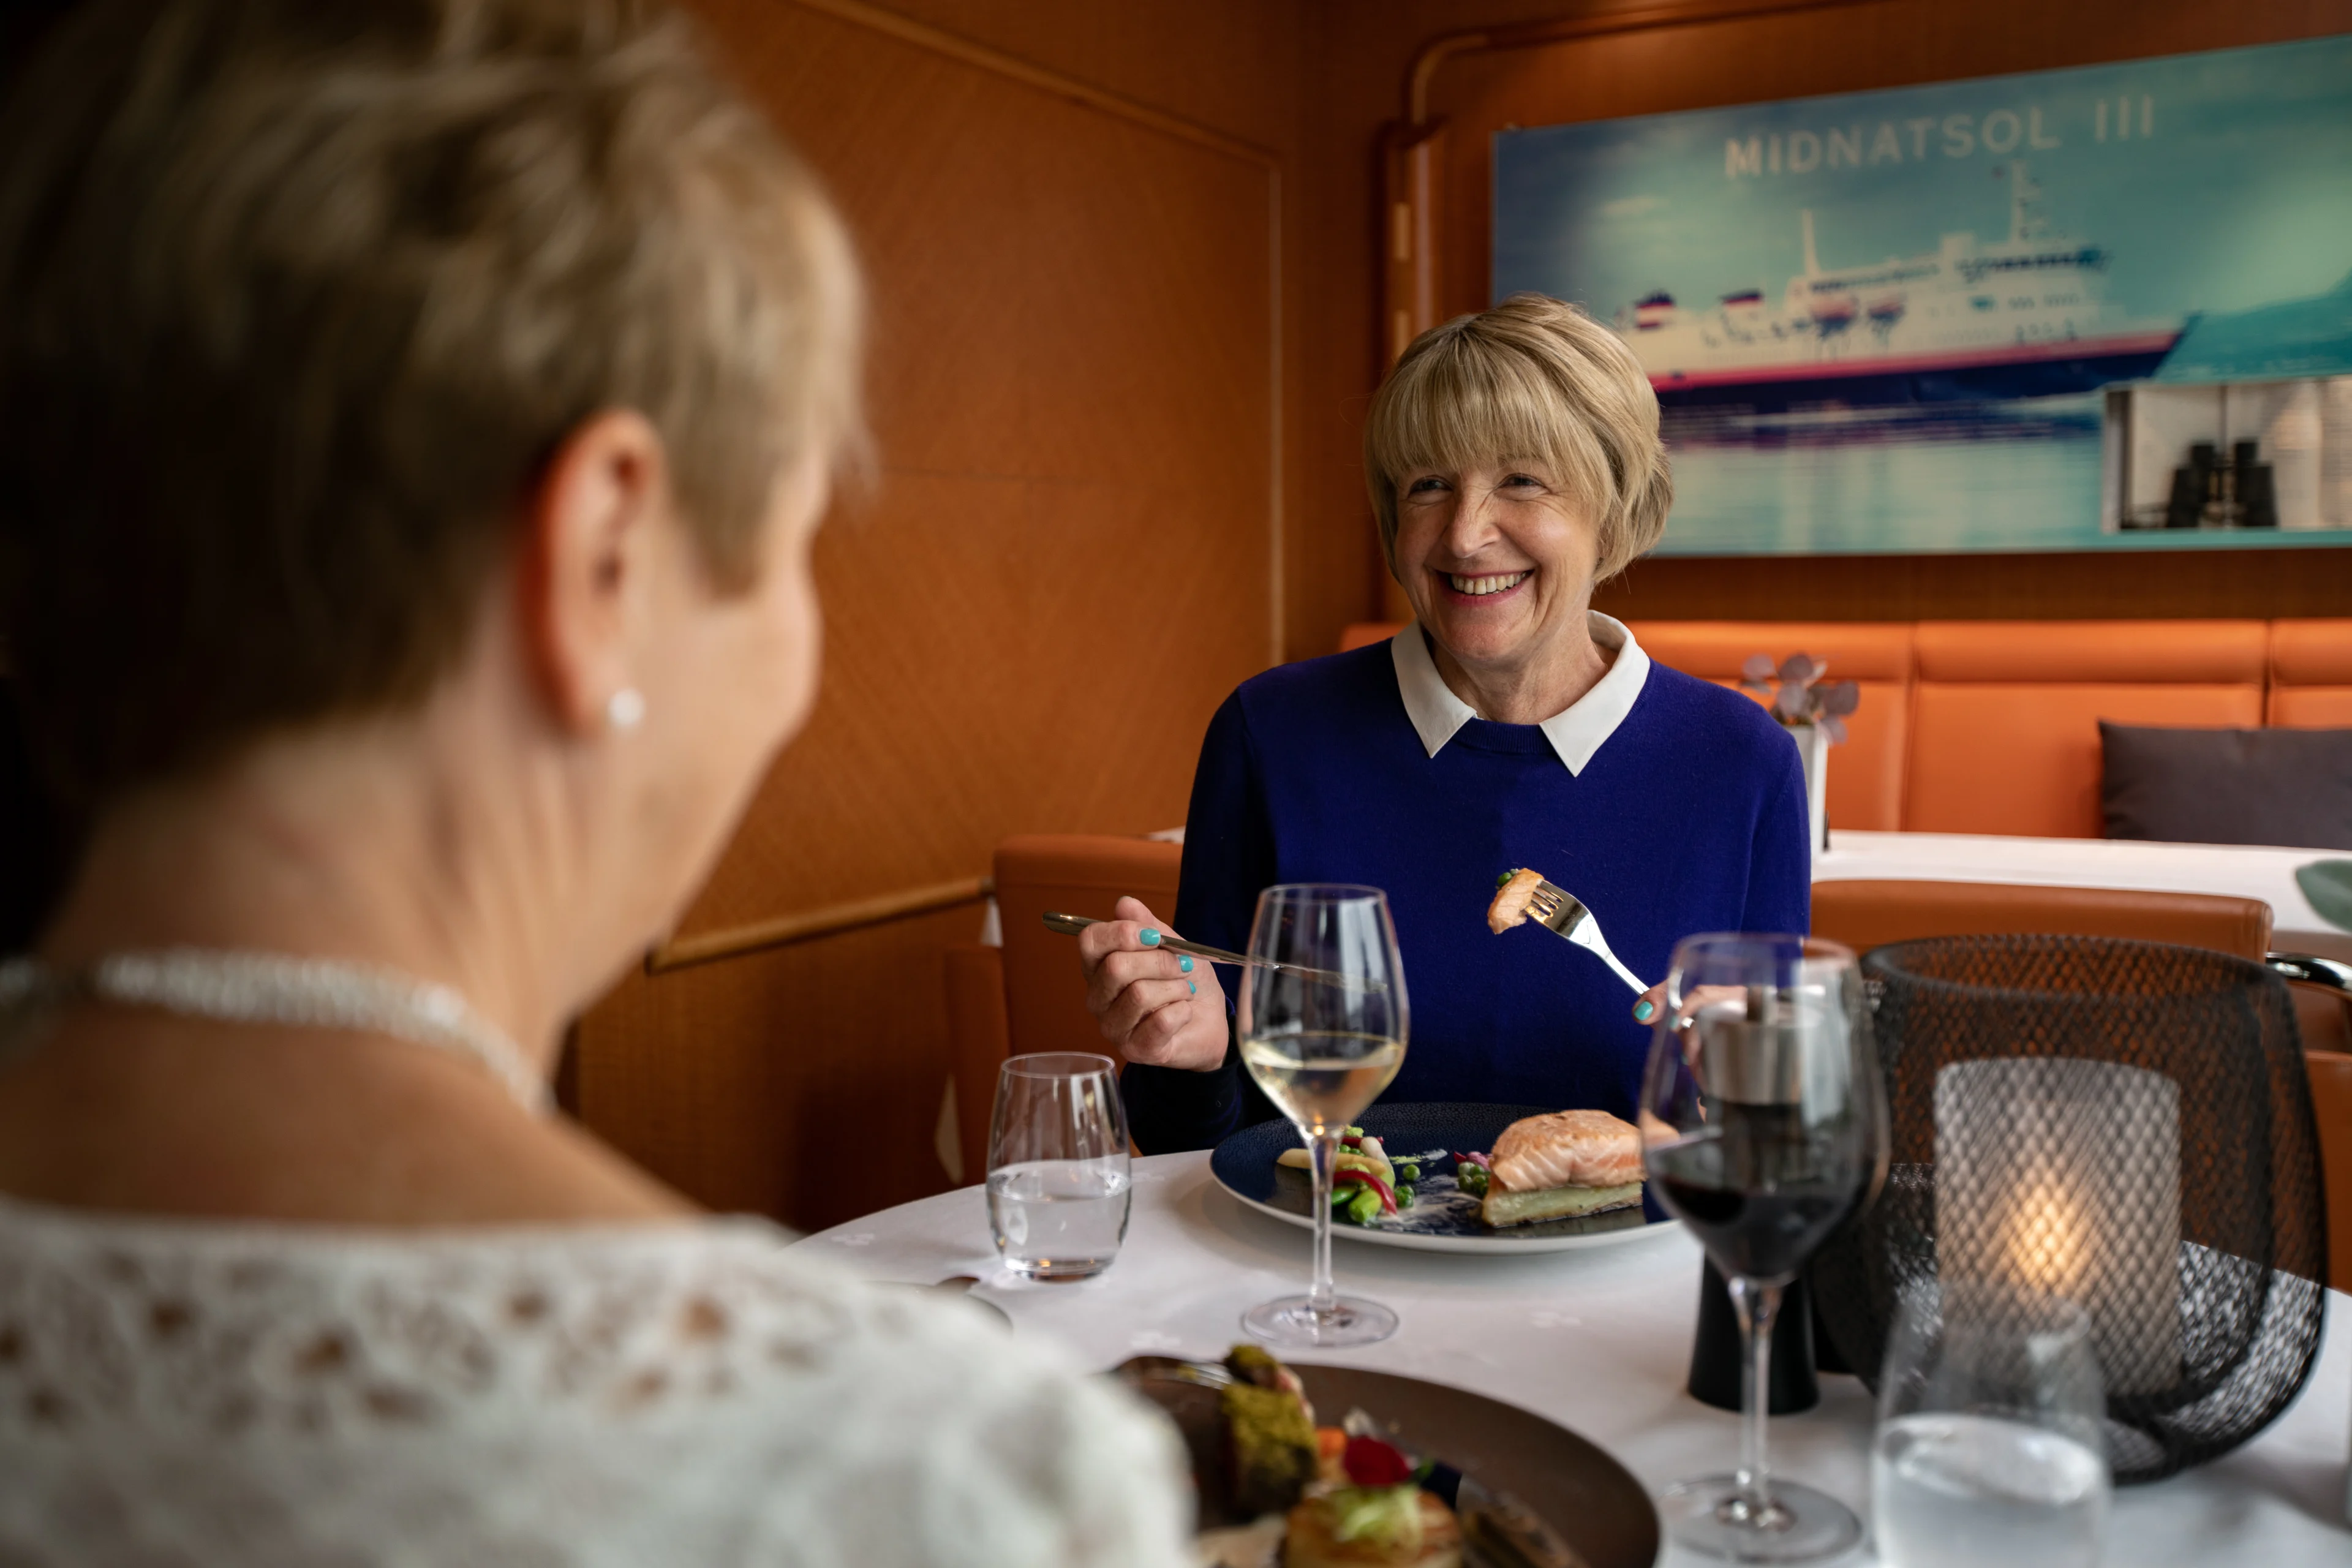 Dining in Lindstr鴐 onboard MS Maud. Photo: Tom Woodstock / Ultrasharp